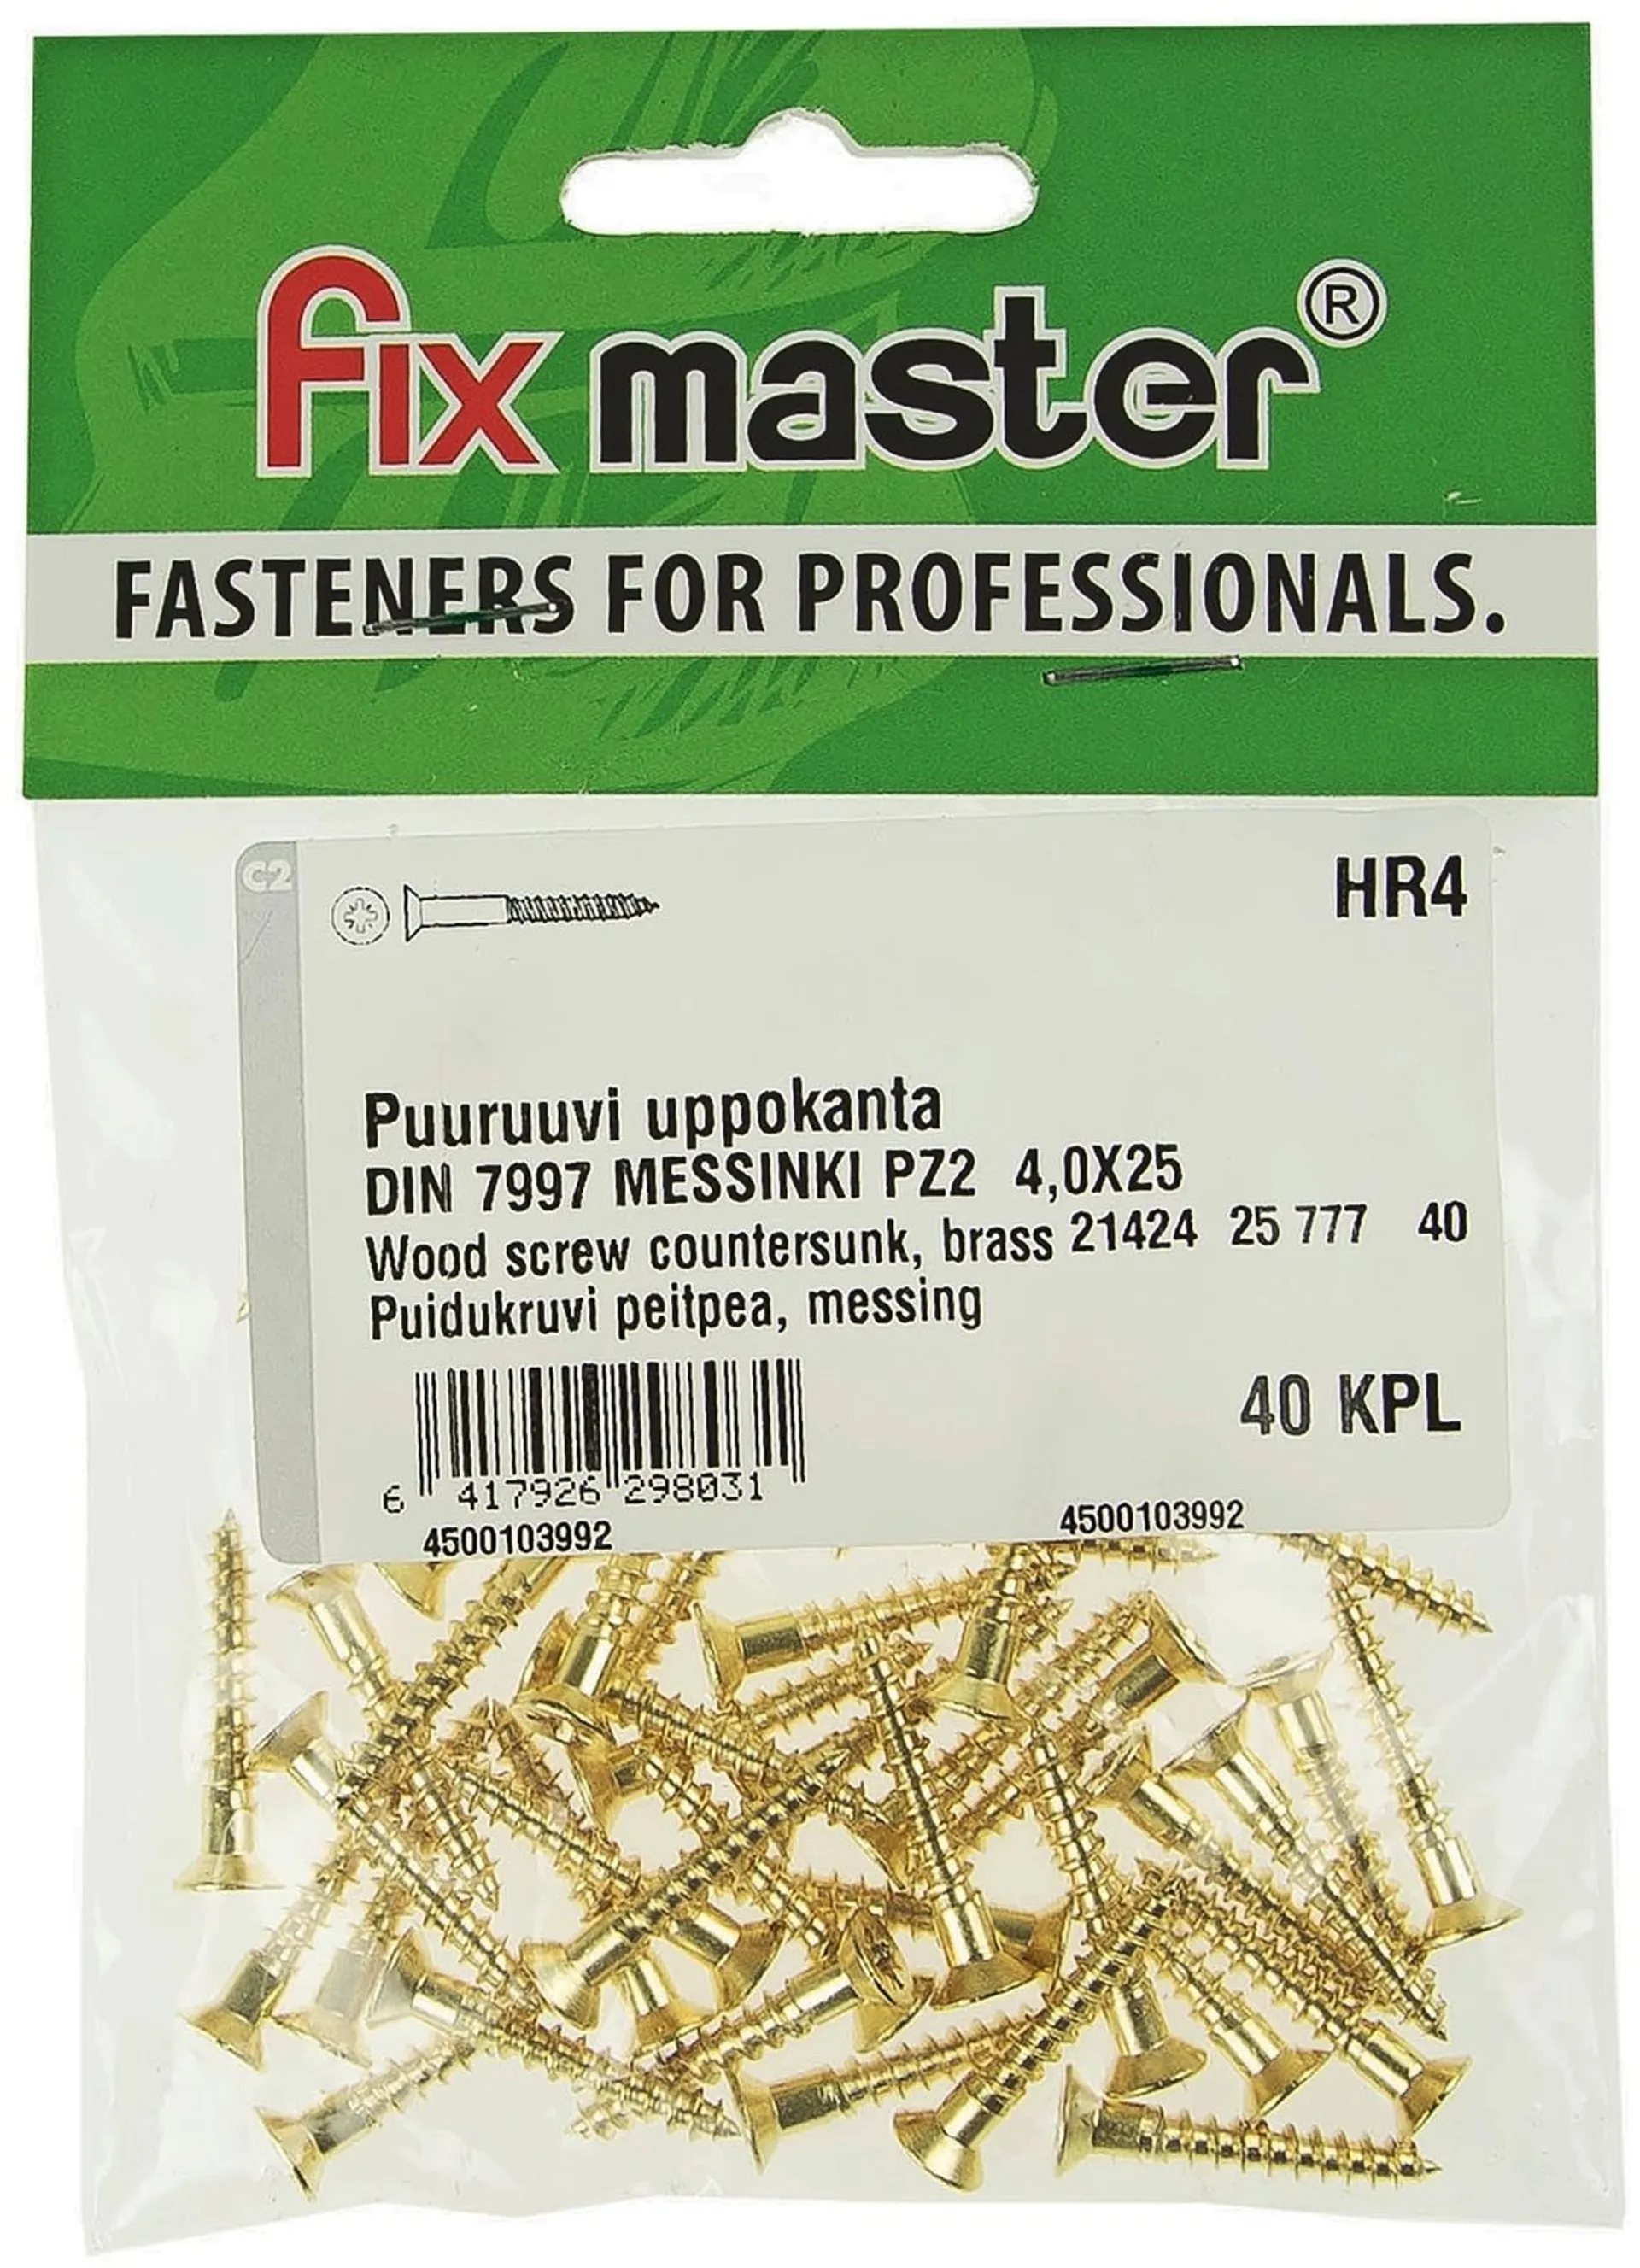 Fix Master puuruuvi uppokanta messinki PZ2 4,0X25 40kpl